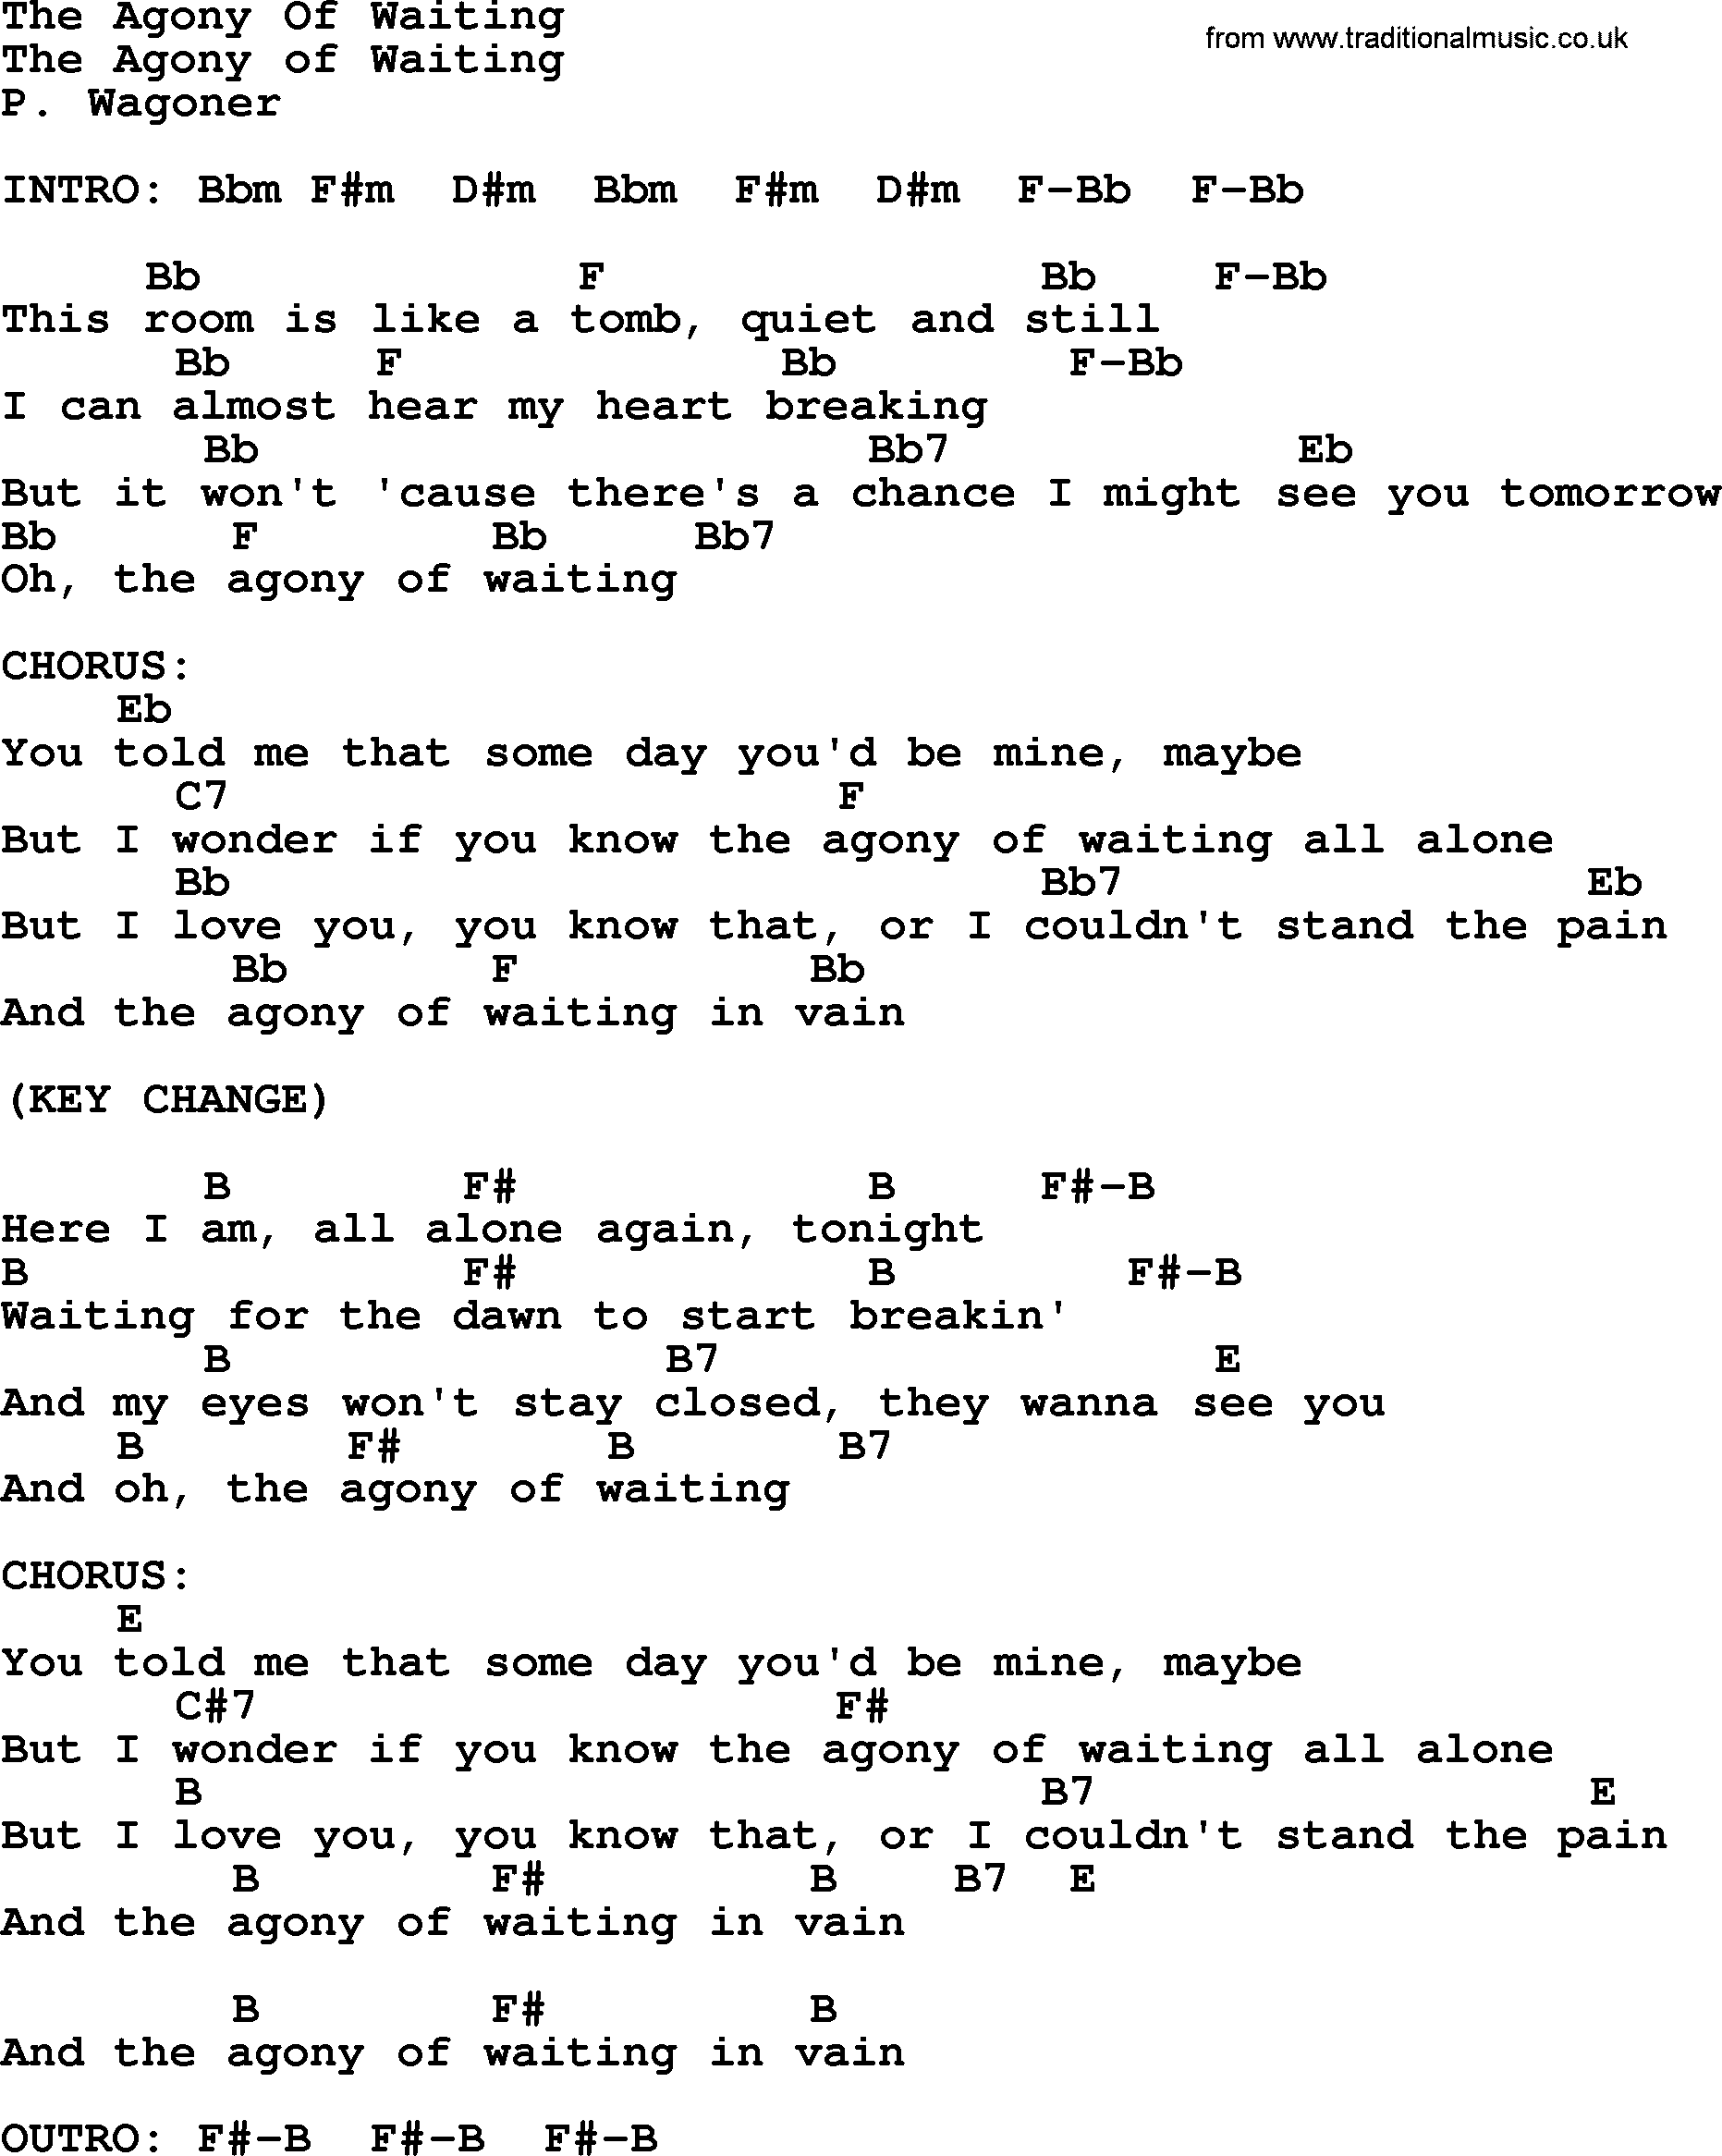 The Agony Of Waiting - Bluegrass lyrics with chords